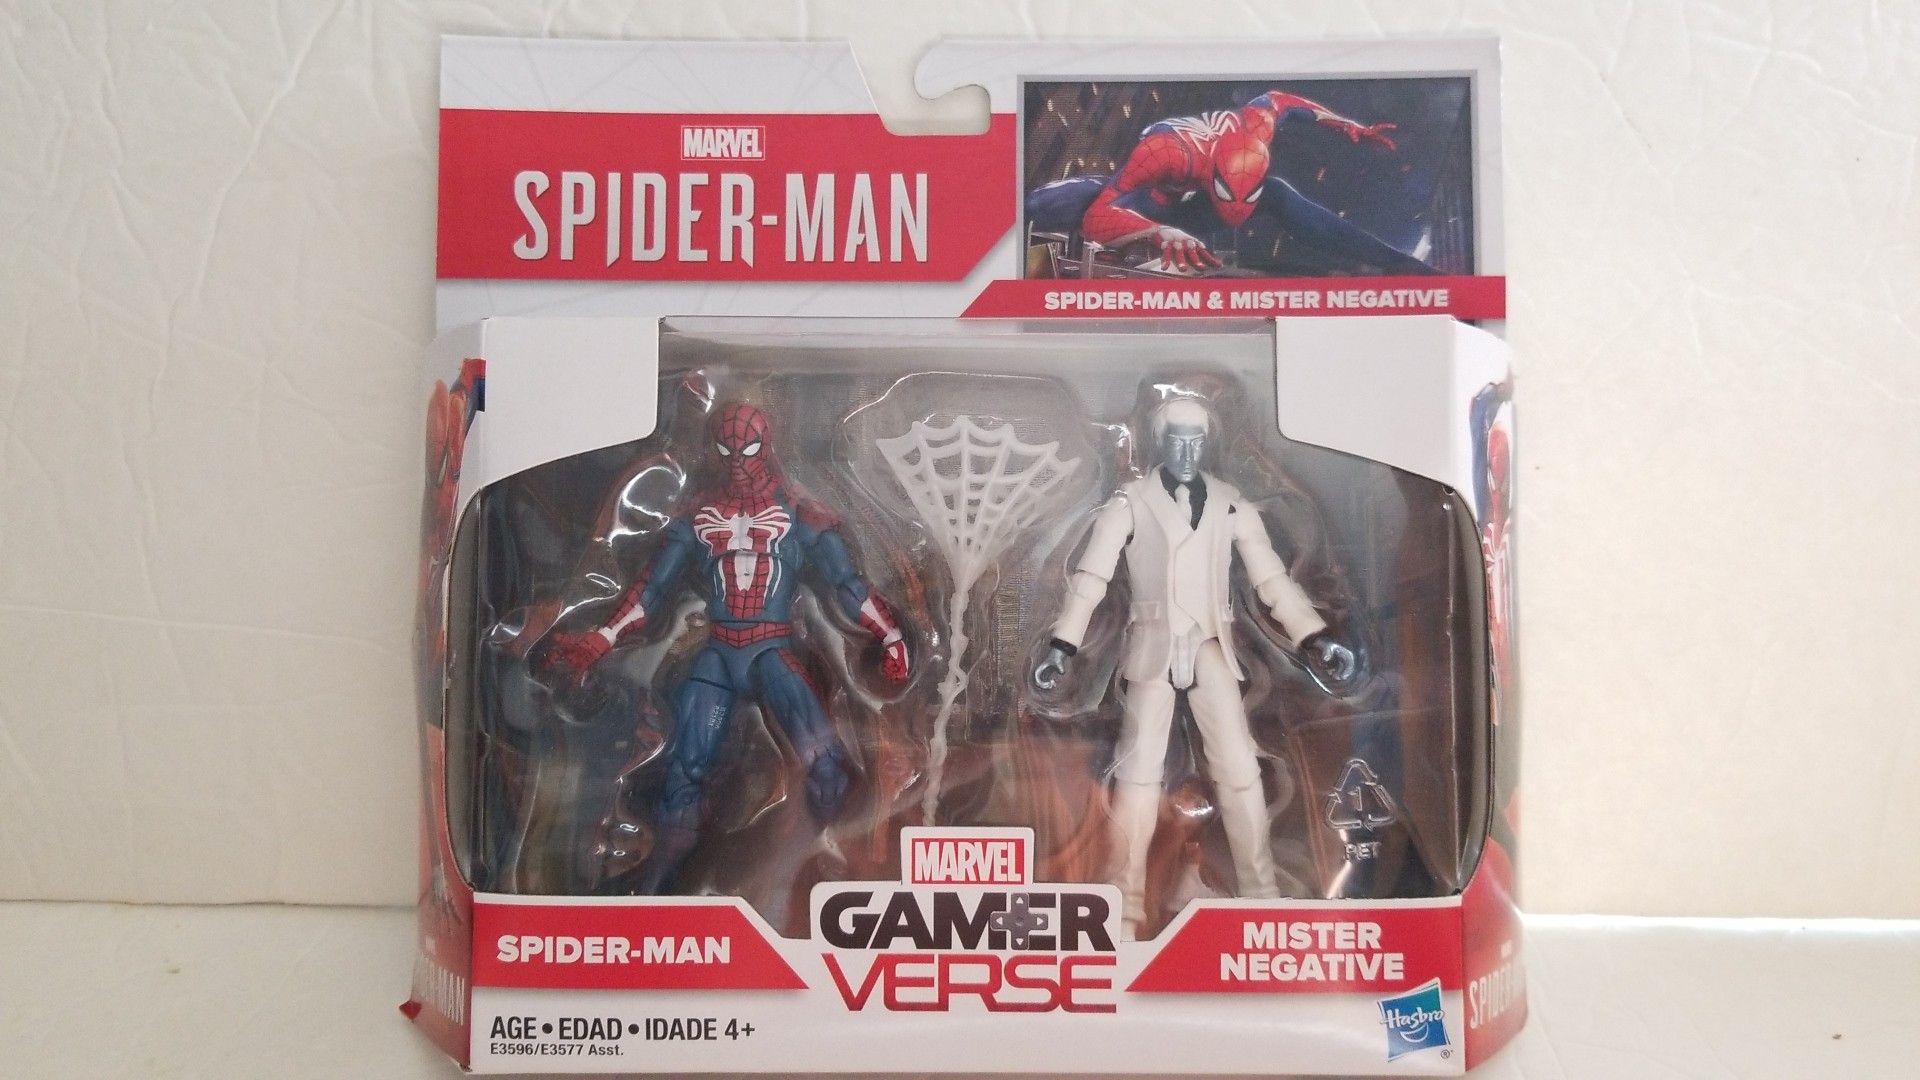 SPIDER-MAN & MISTER NEGATIVE Marvel Gamer Verse Hasbro action figure